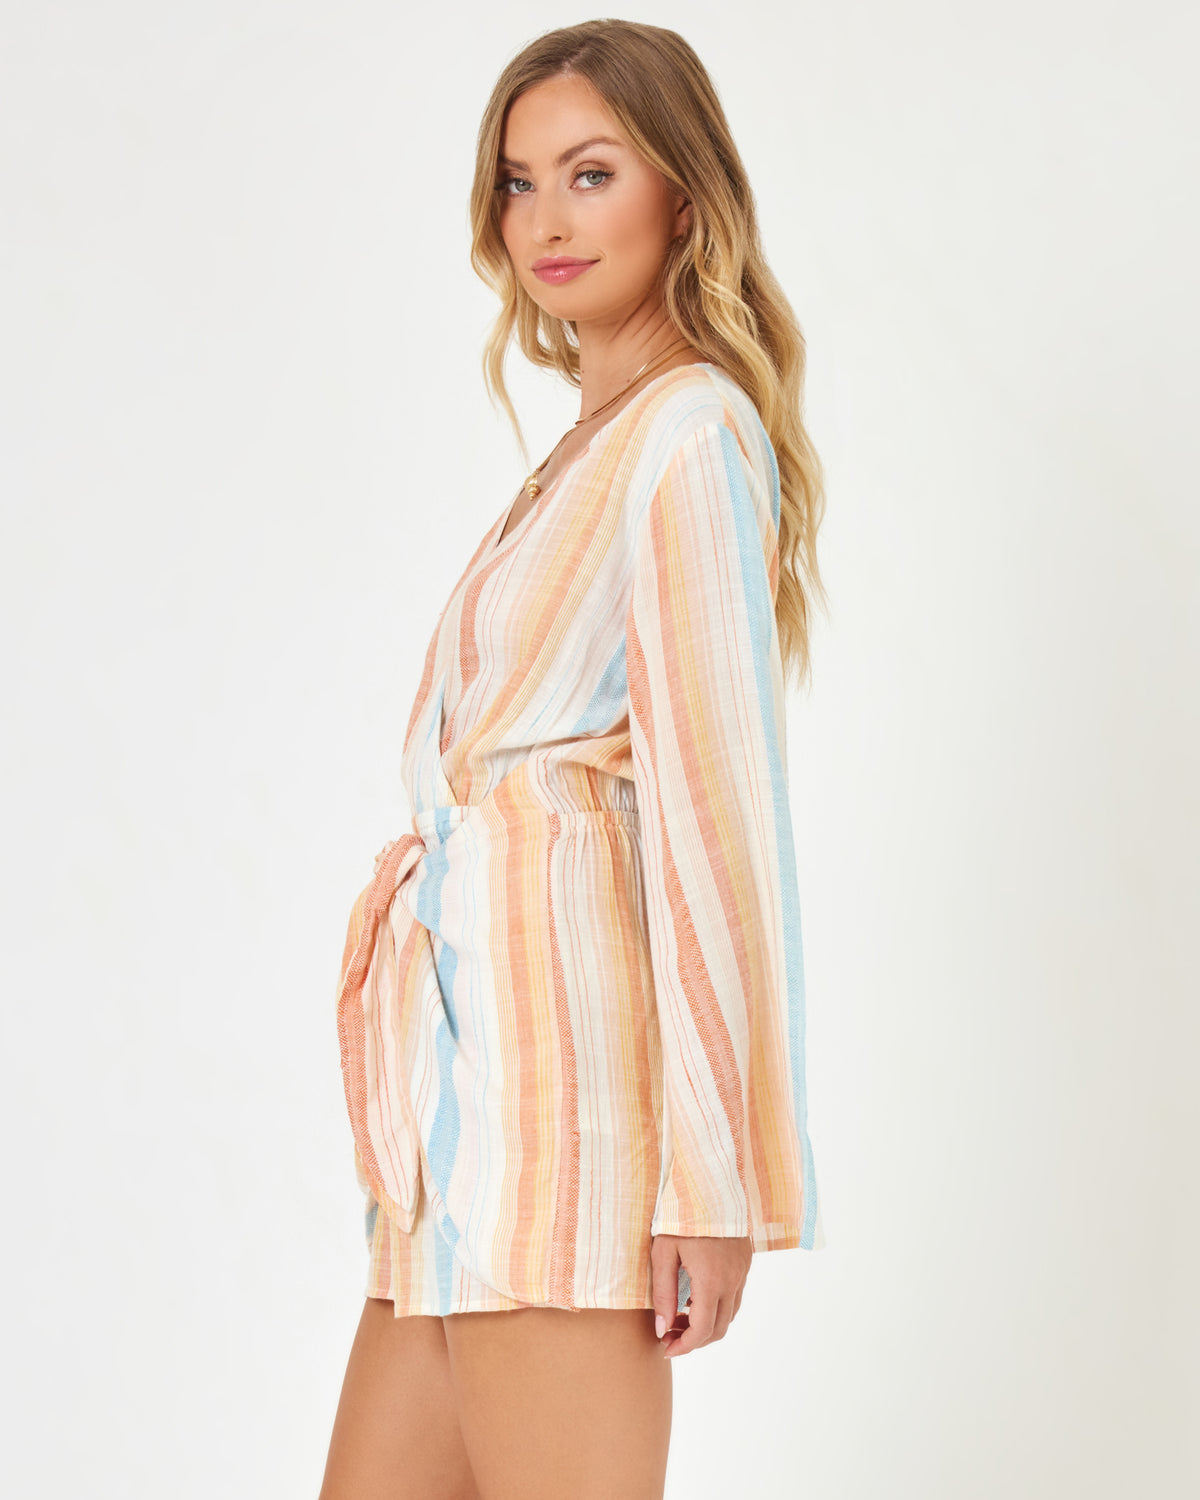 Printed Kristy Dress - Sunset Skies Stripe Sunset Skies Stripe | Model: Taylor (size: S)